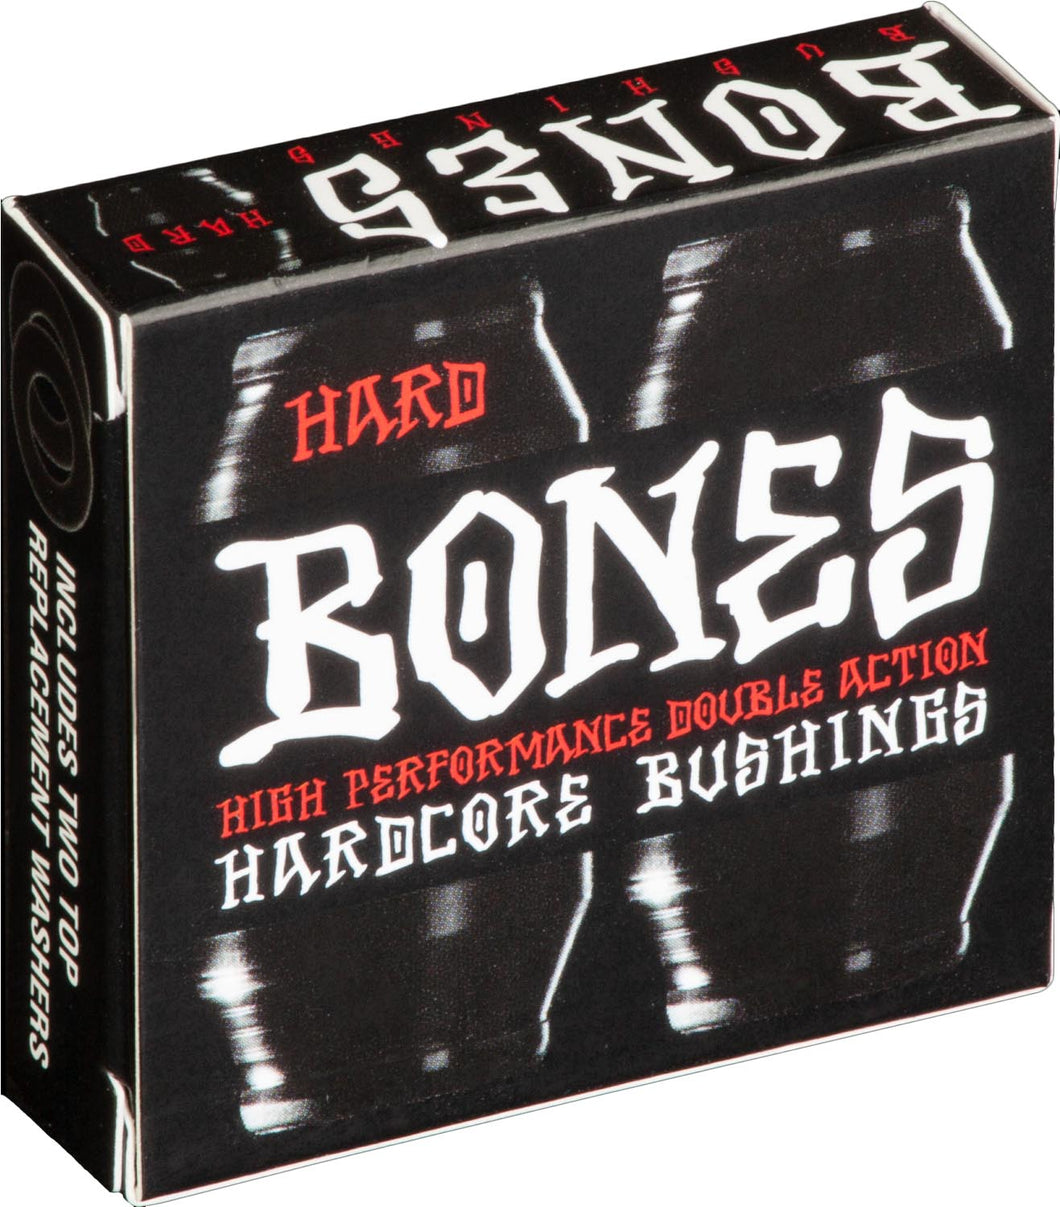 Bones Hardcore Bushings 96A Hard Black